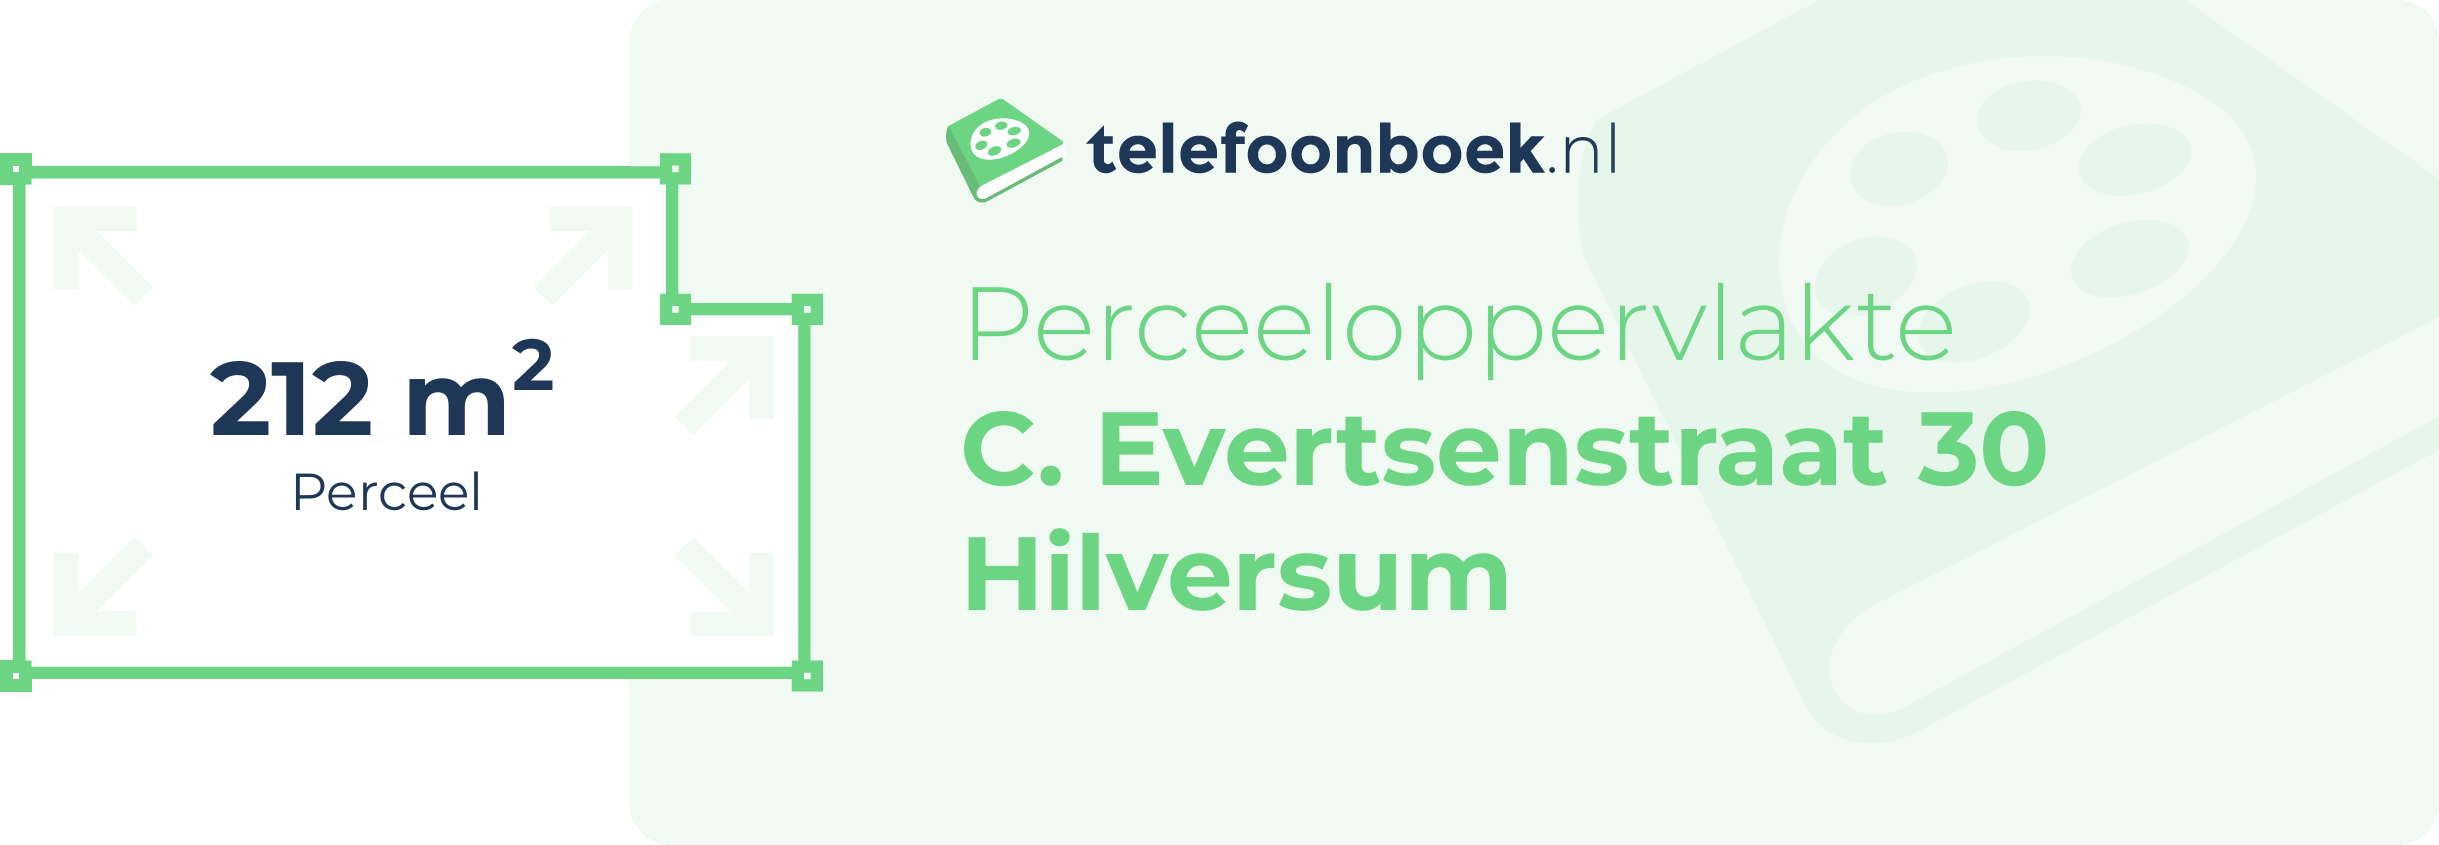 Perceeloppervlakte C. Evertsenstraat 30 Hilversum